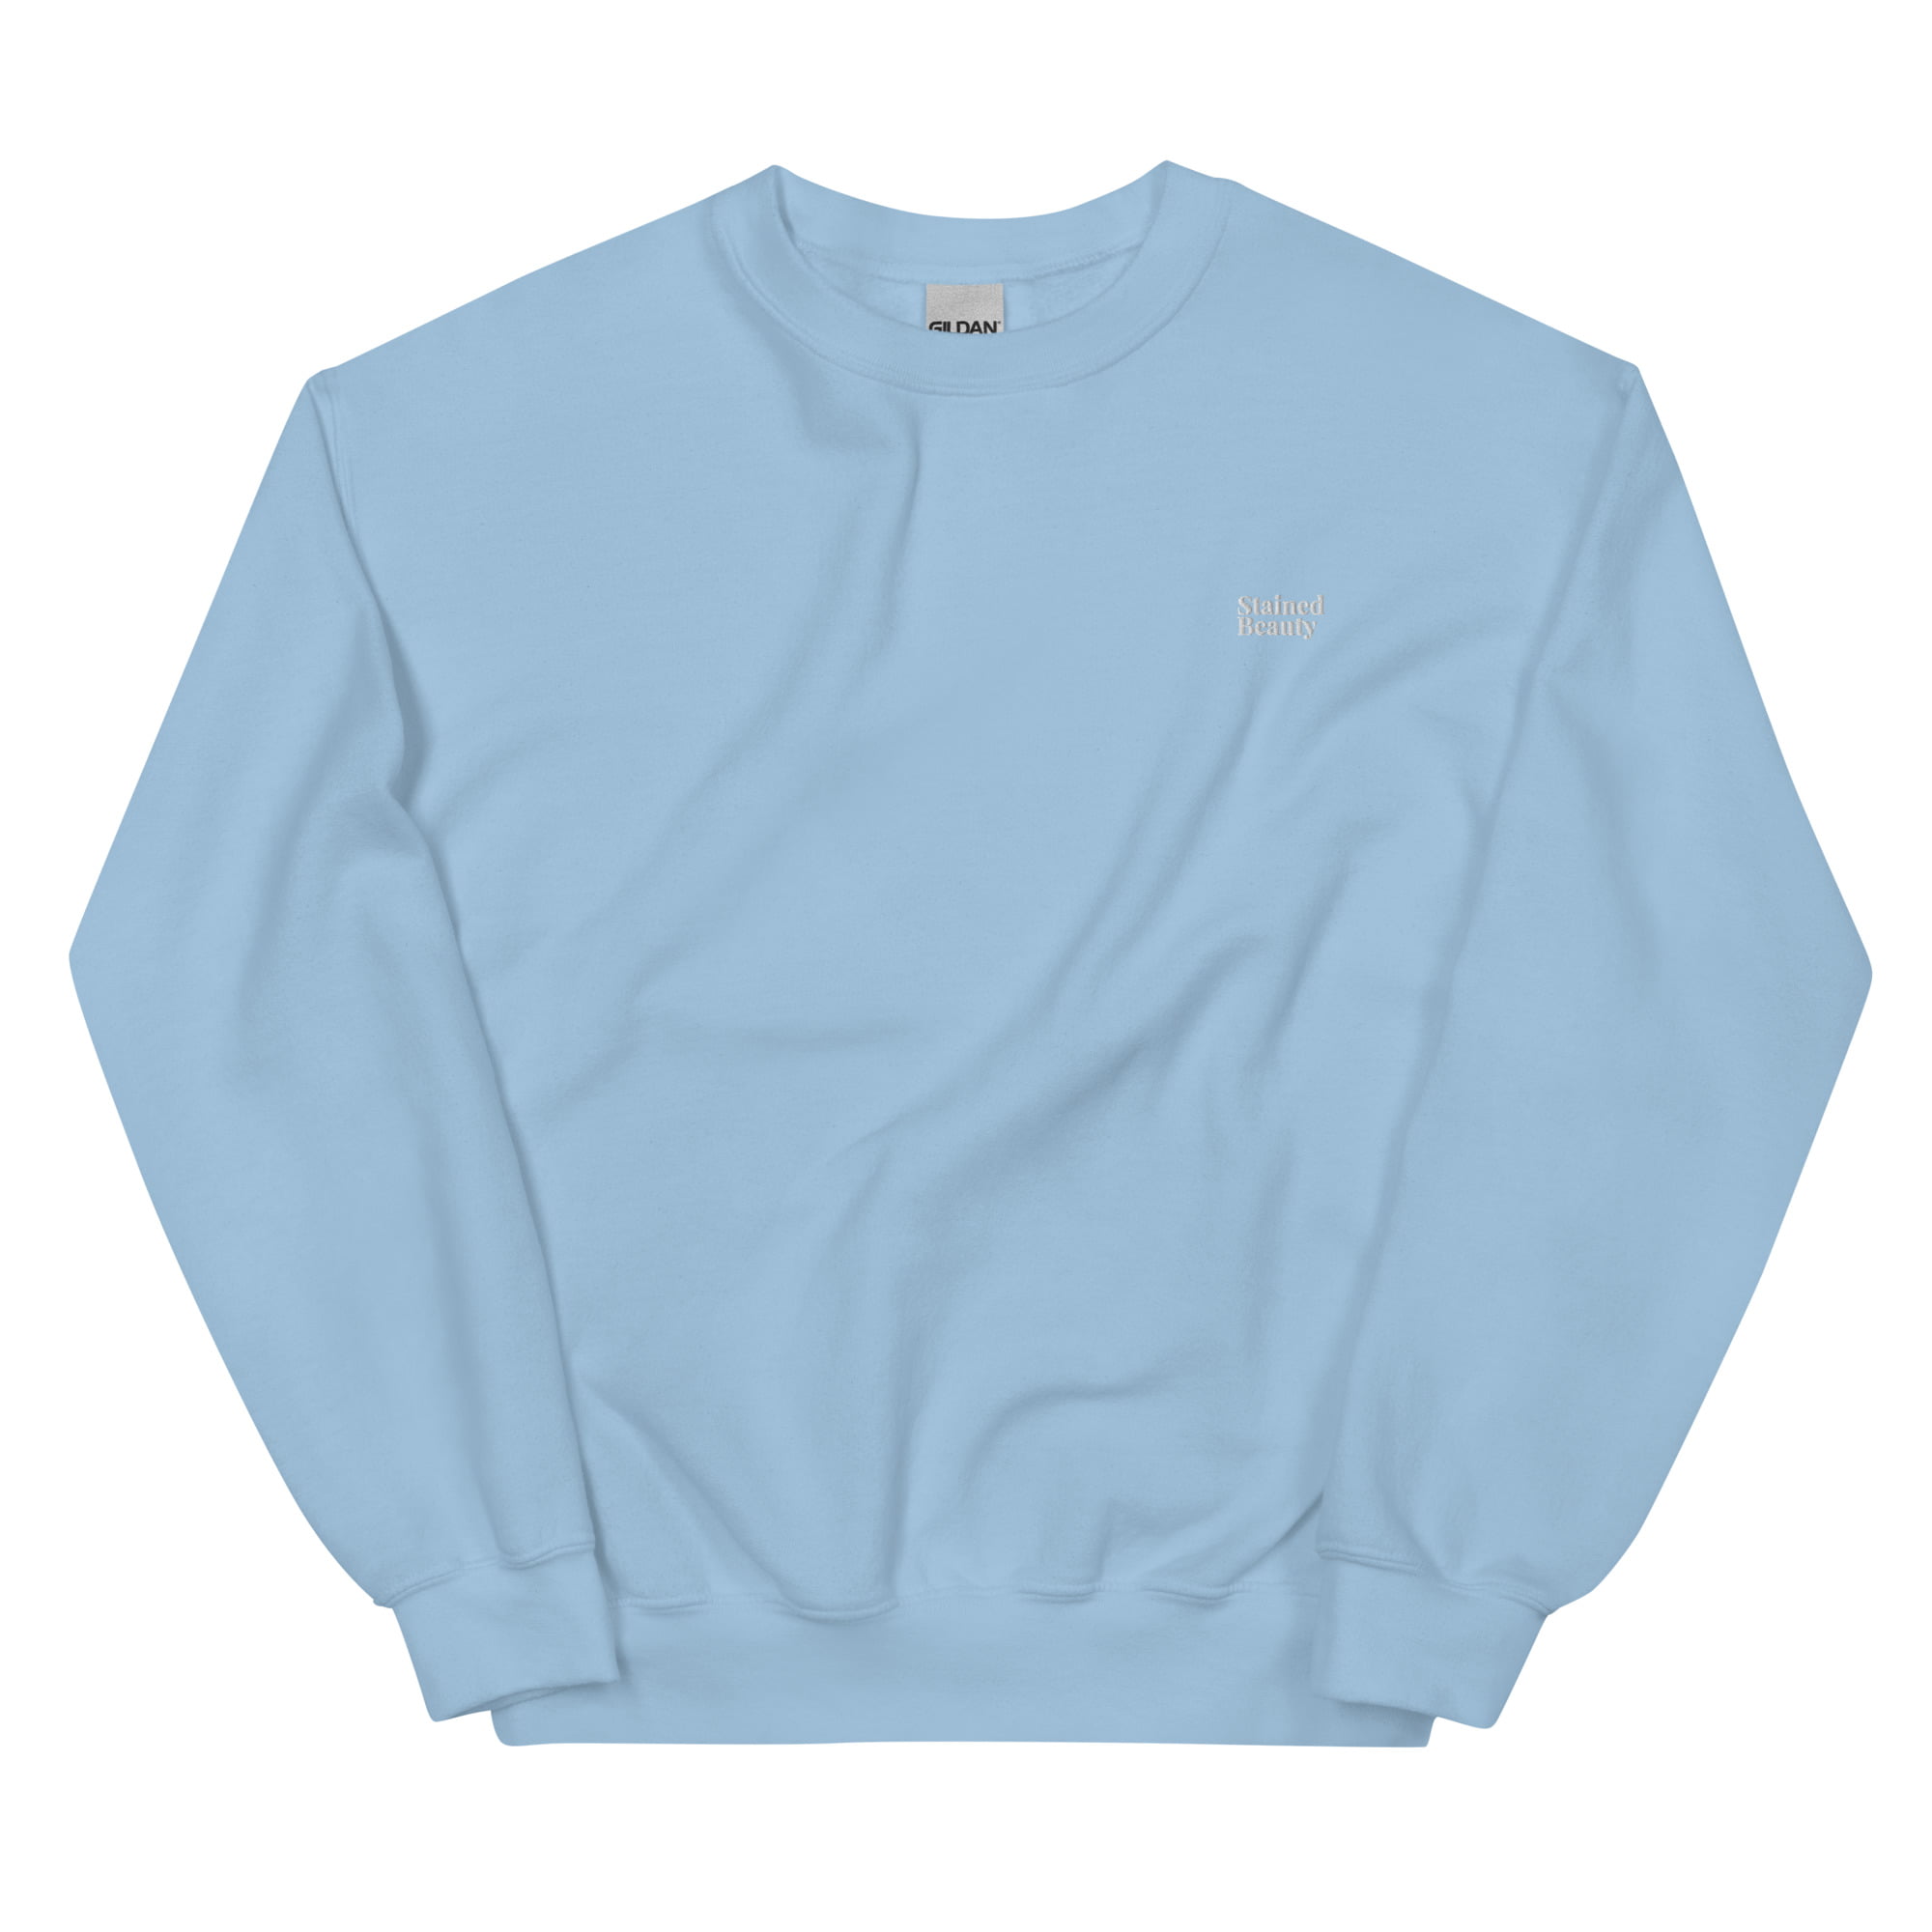 unisex crew neck sweatshirt light blue front 650b5367f2f1c 1.jpg